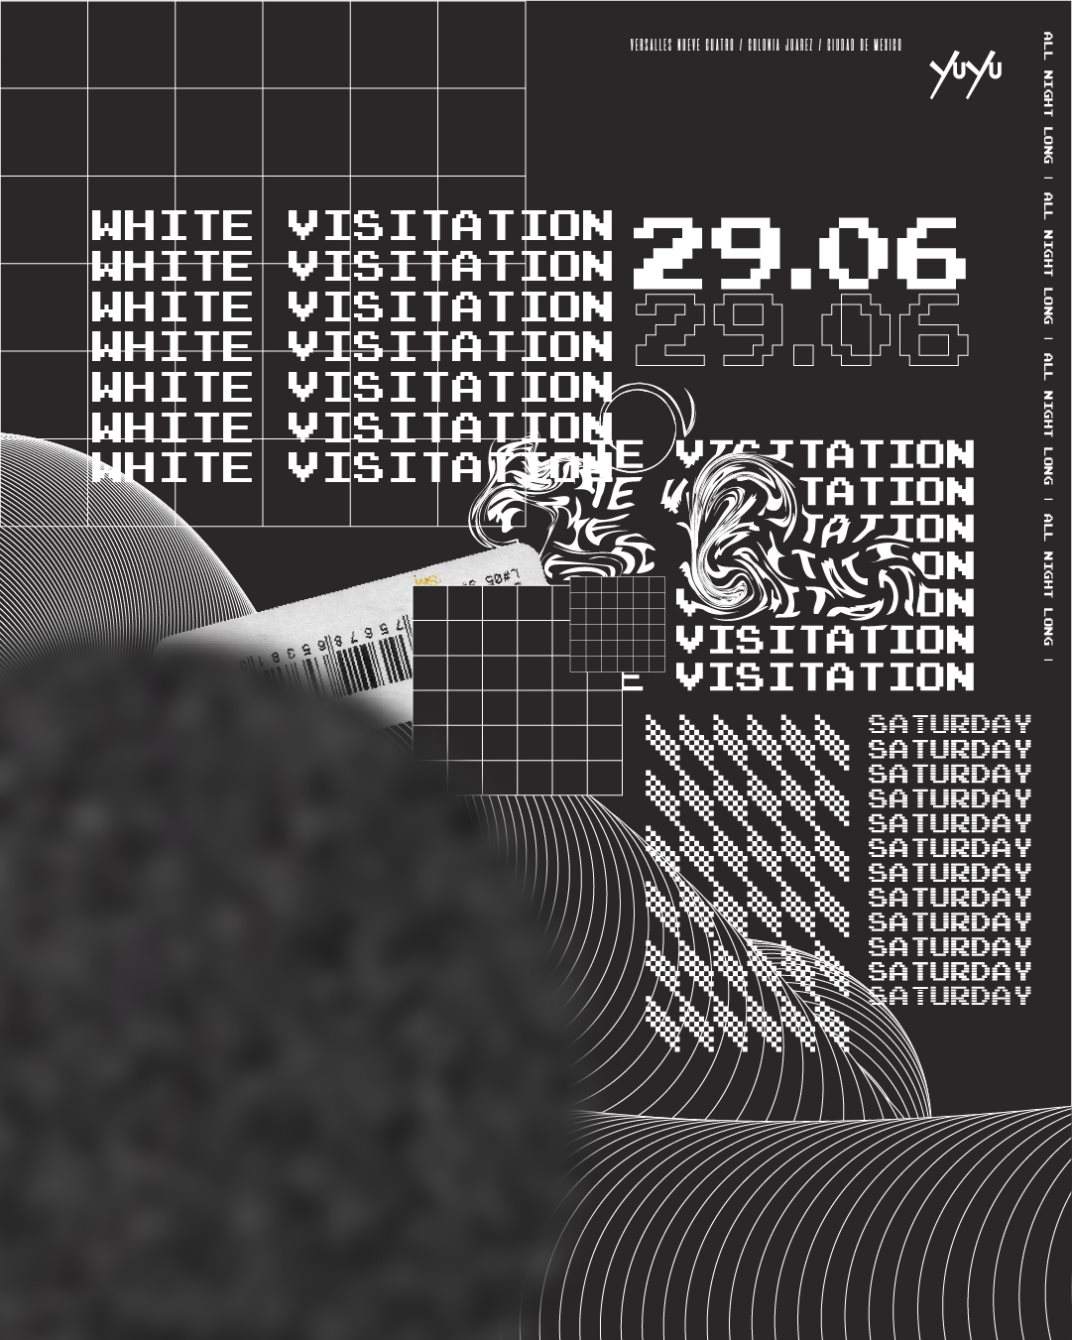 White Visitation (All Night Long) - フライヤー表